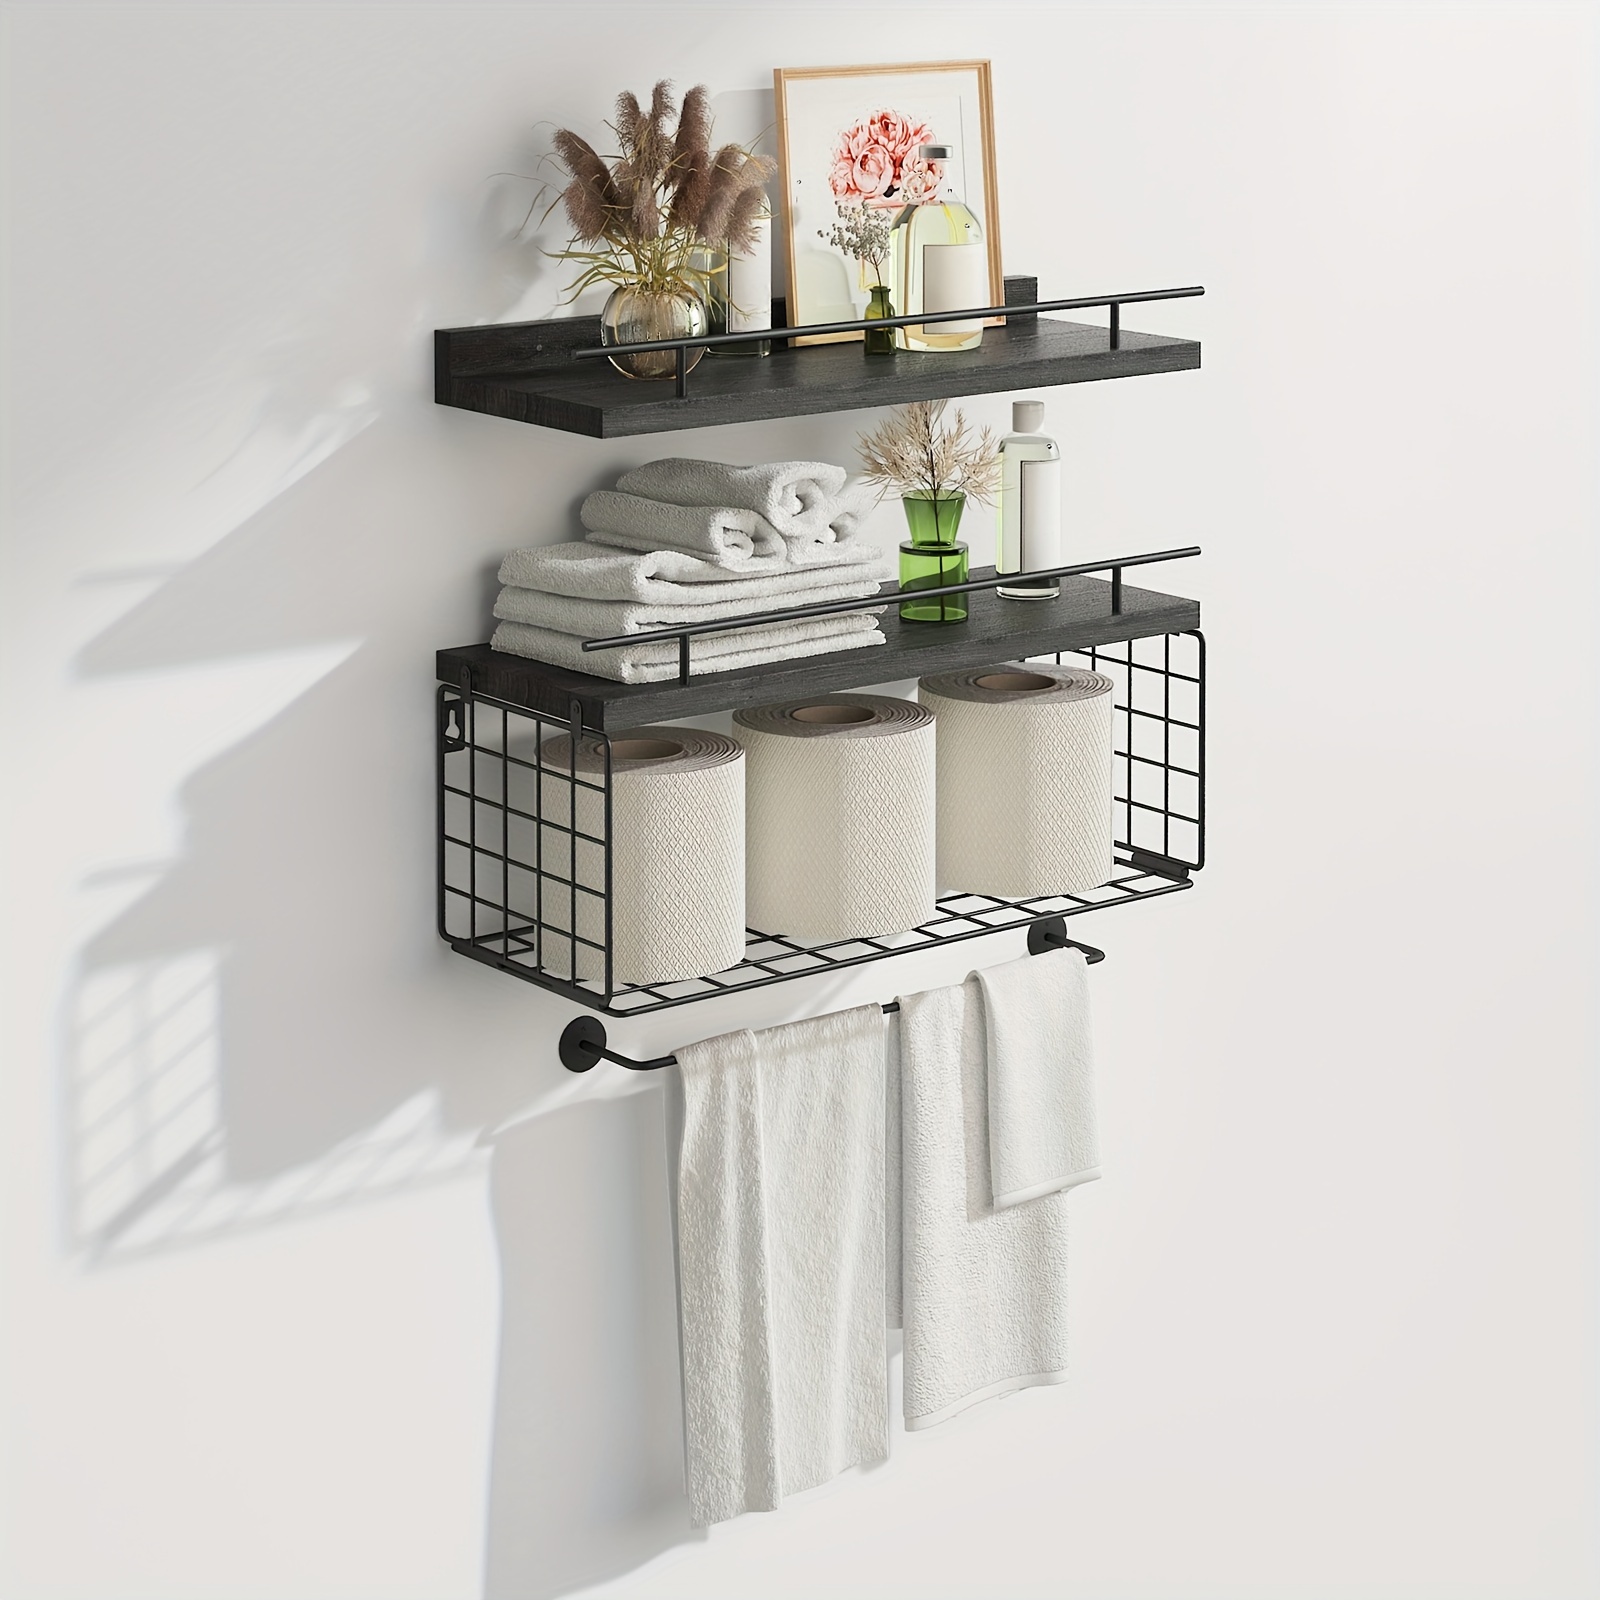 

3-shelves Floating Shelves, Bathroom Wall Decor With Storage Basket, Offer A Secure Storage Space For Bathroom Accessories, Shelves With Towel Rack For Bedroom (black)